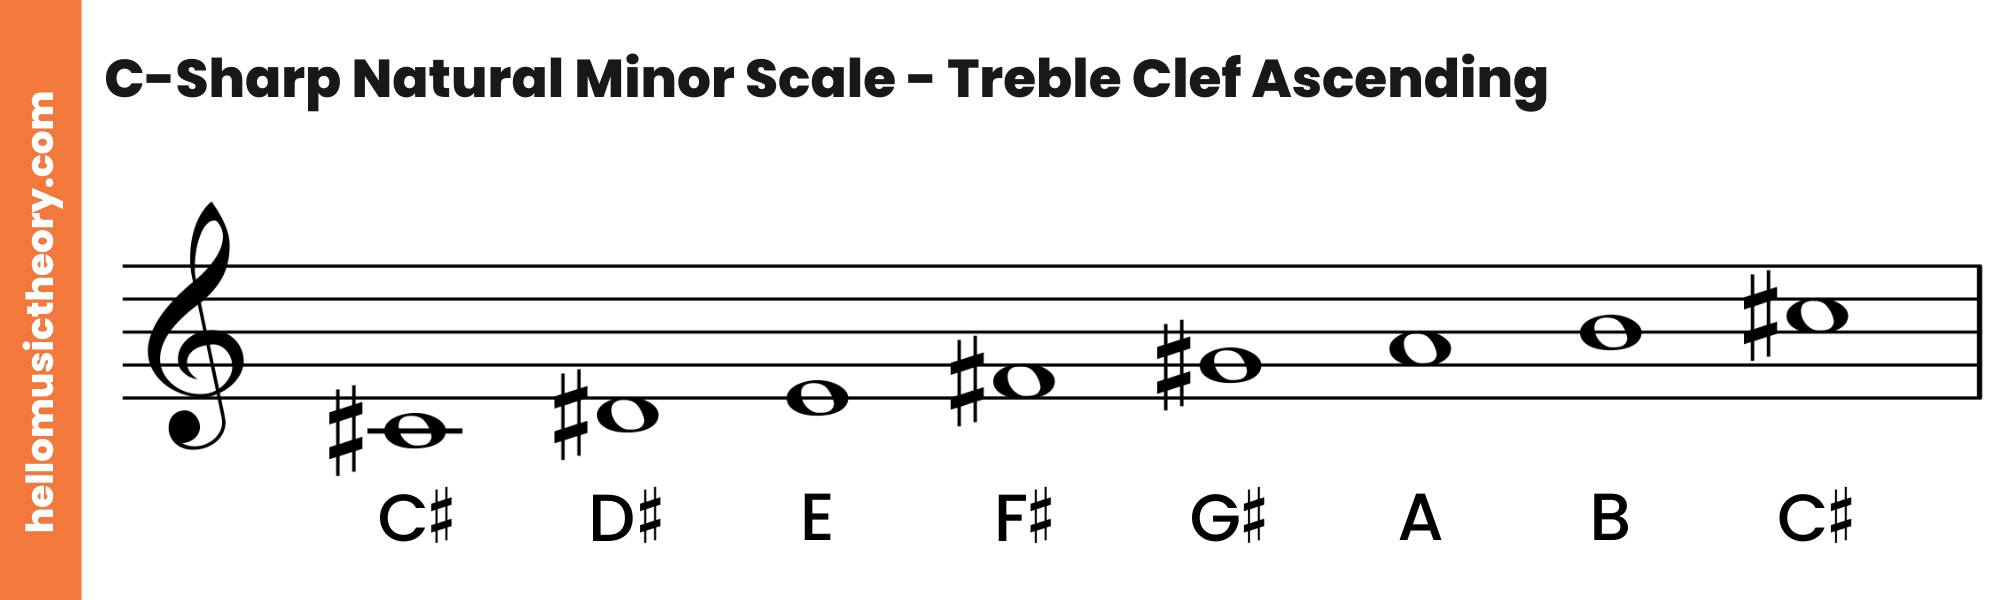 C-Sharp-Natural-Minor-Scale-Treble-Clef-Ascending